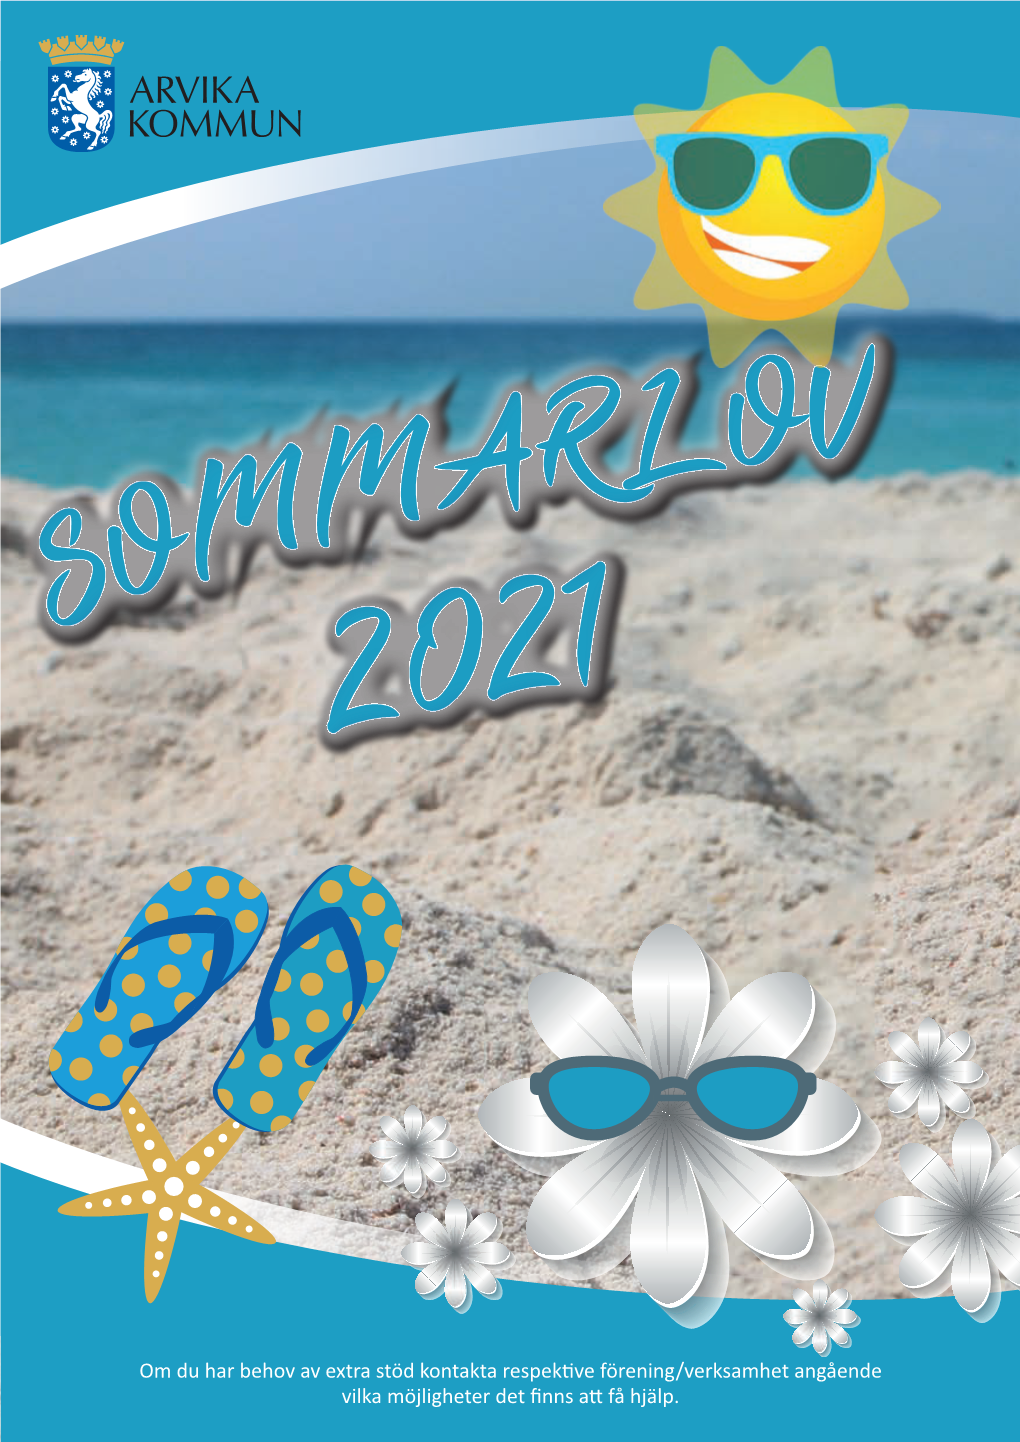 Sommarlovsprogram 2021